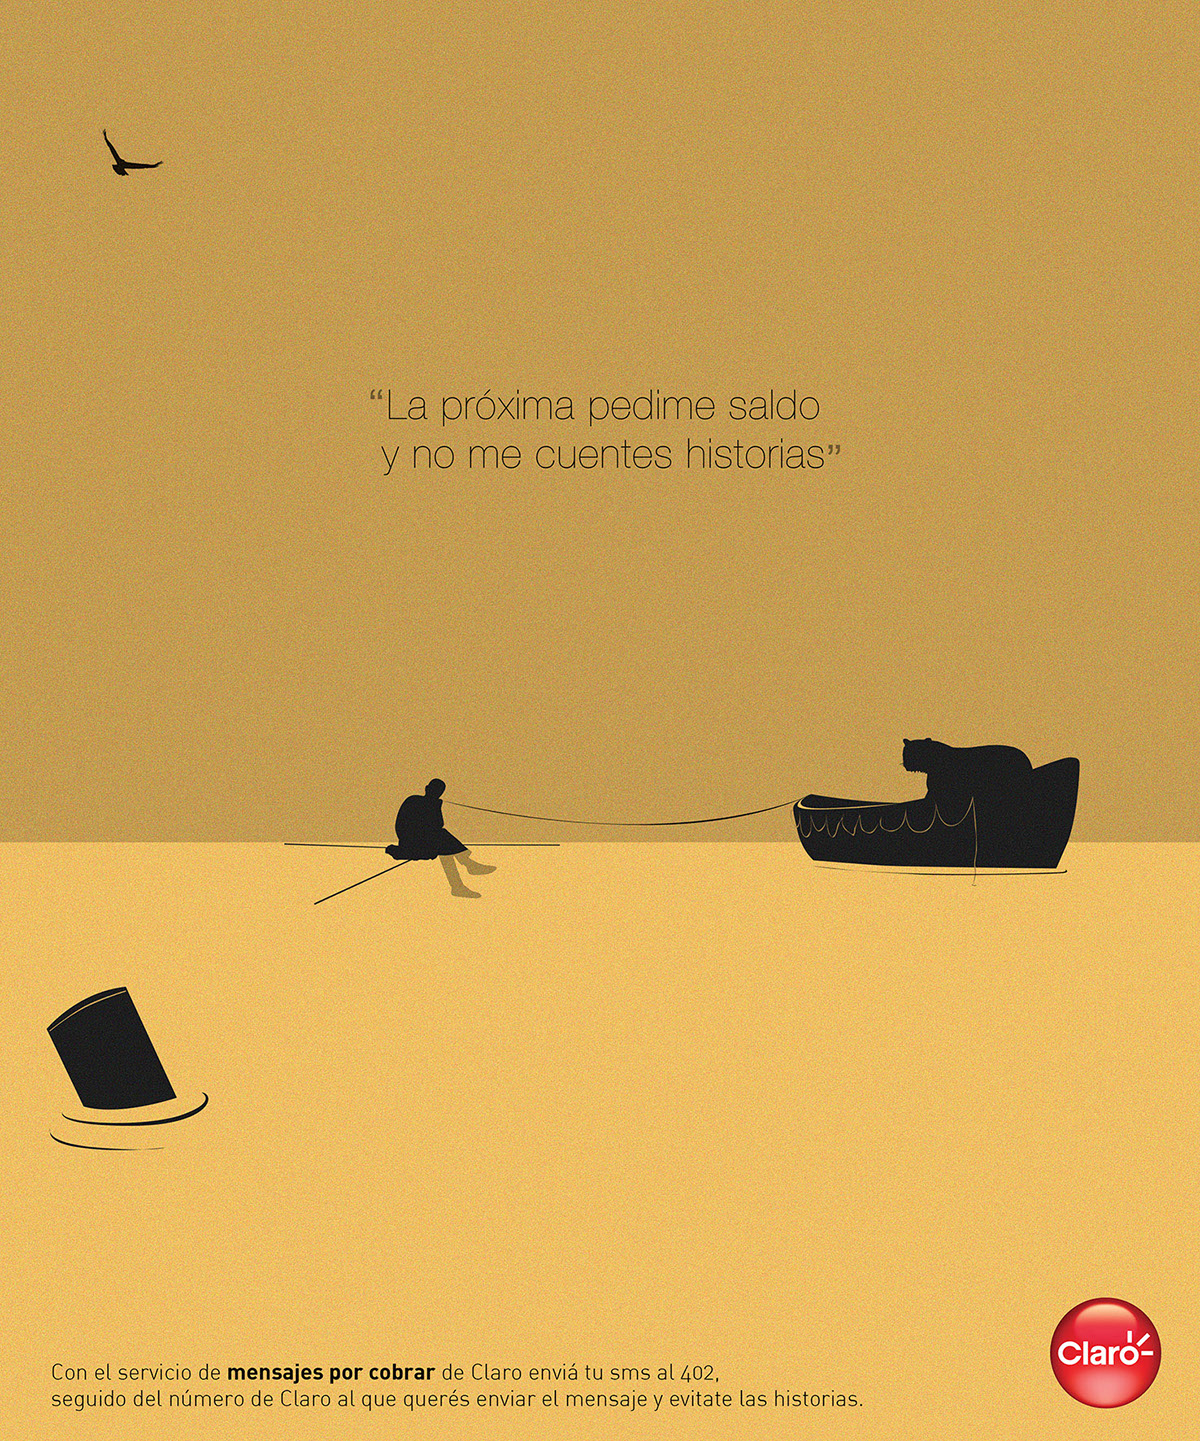 movie poster ad jurassic park 127 hours life of pi vida de pi minimalist Stories Ad Mimimalist Movie posters titanic